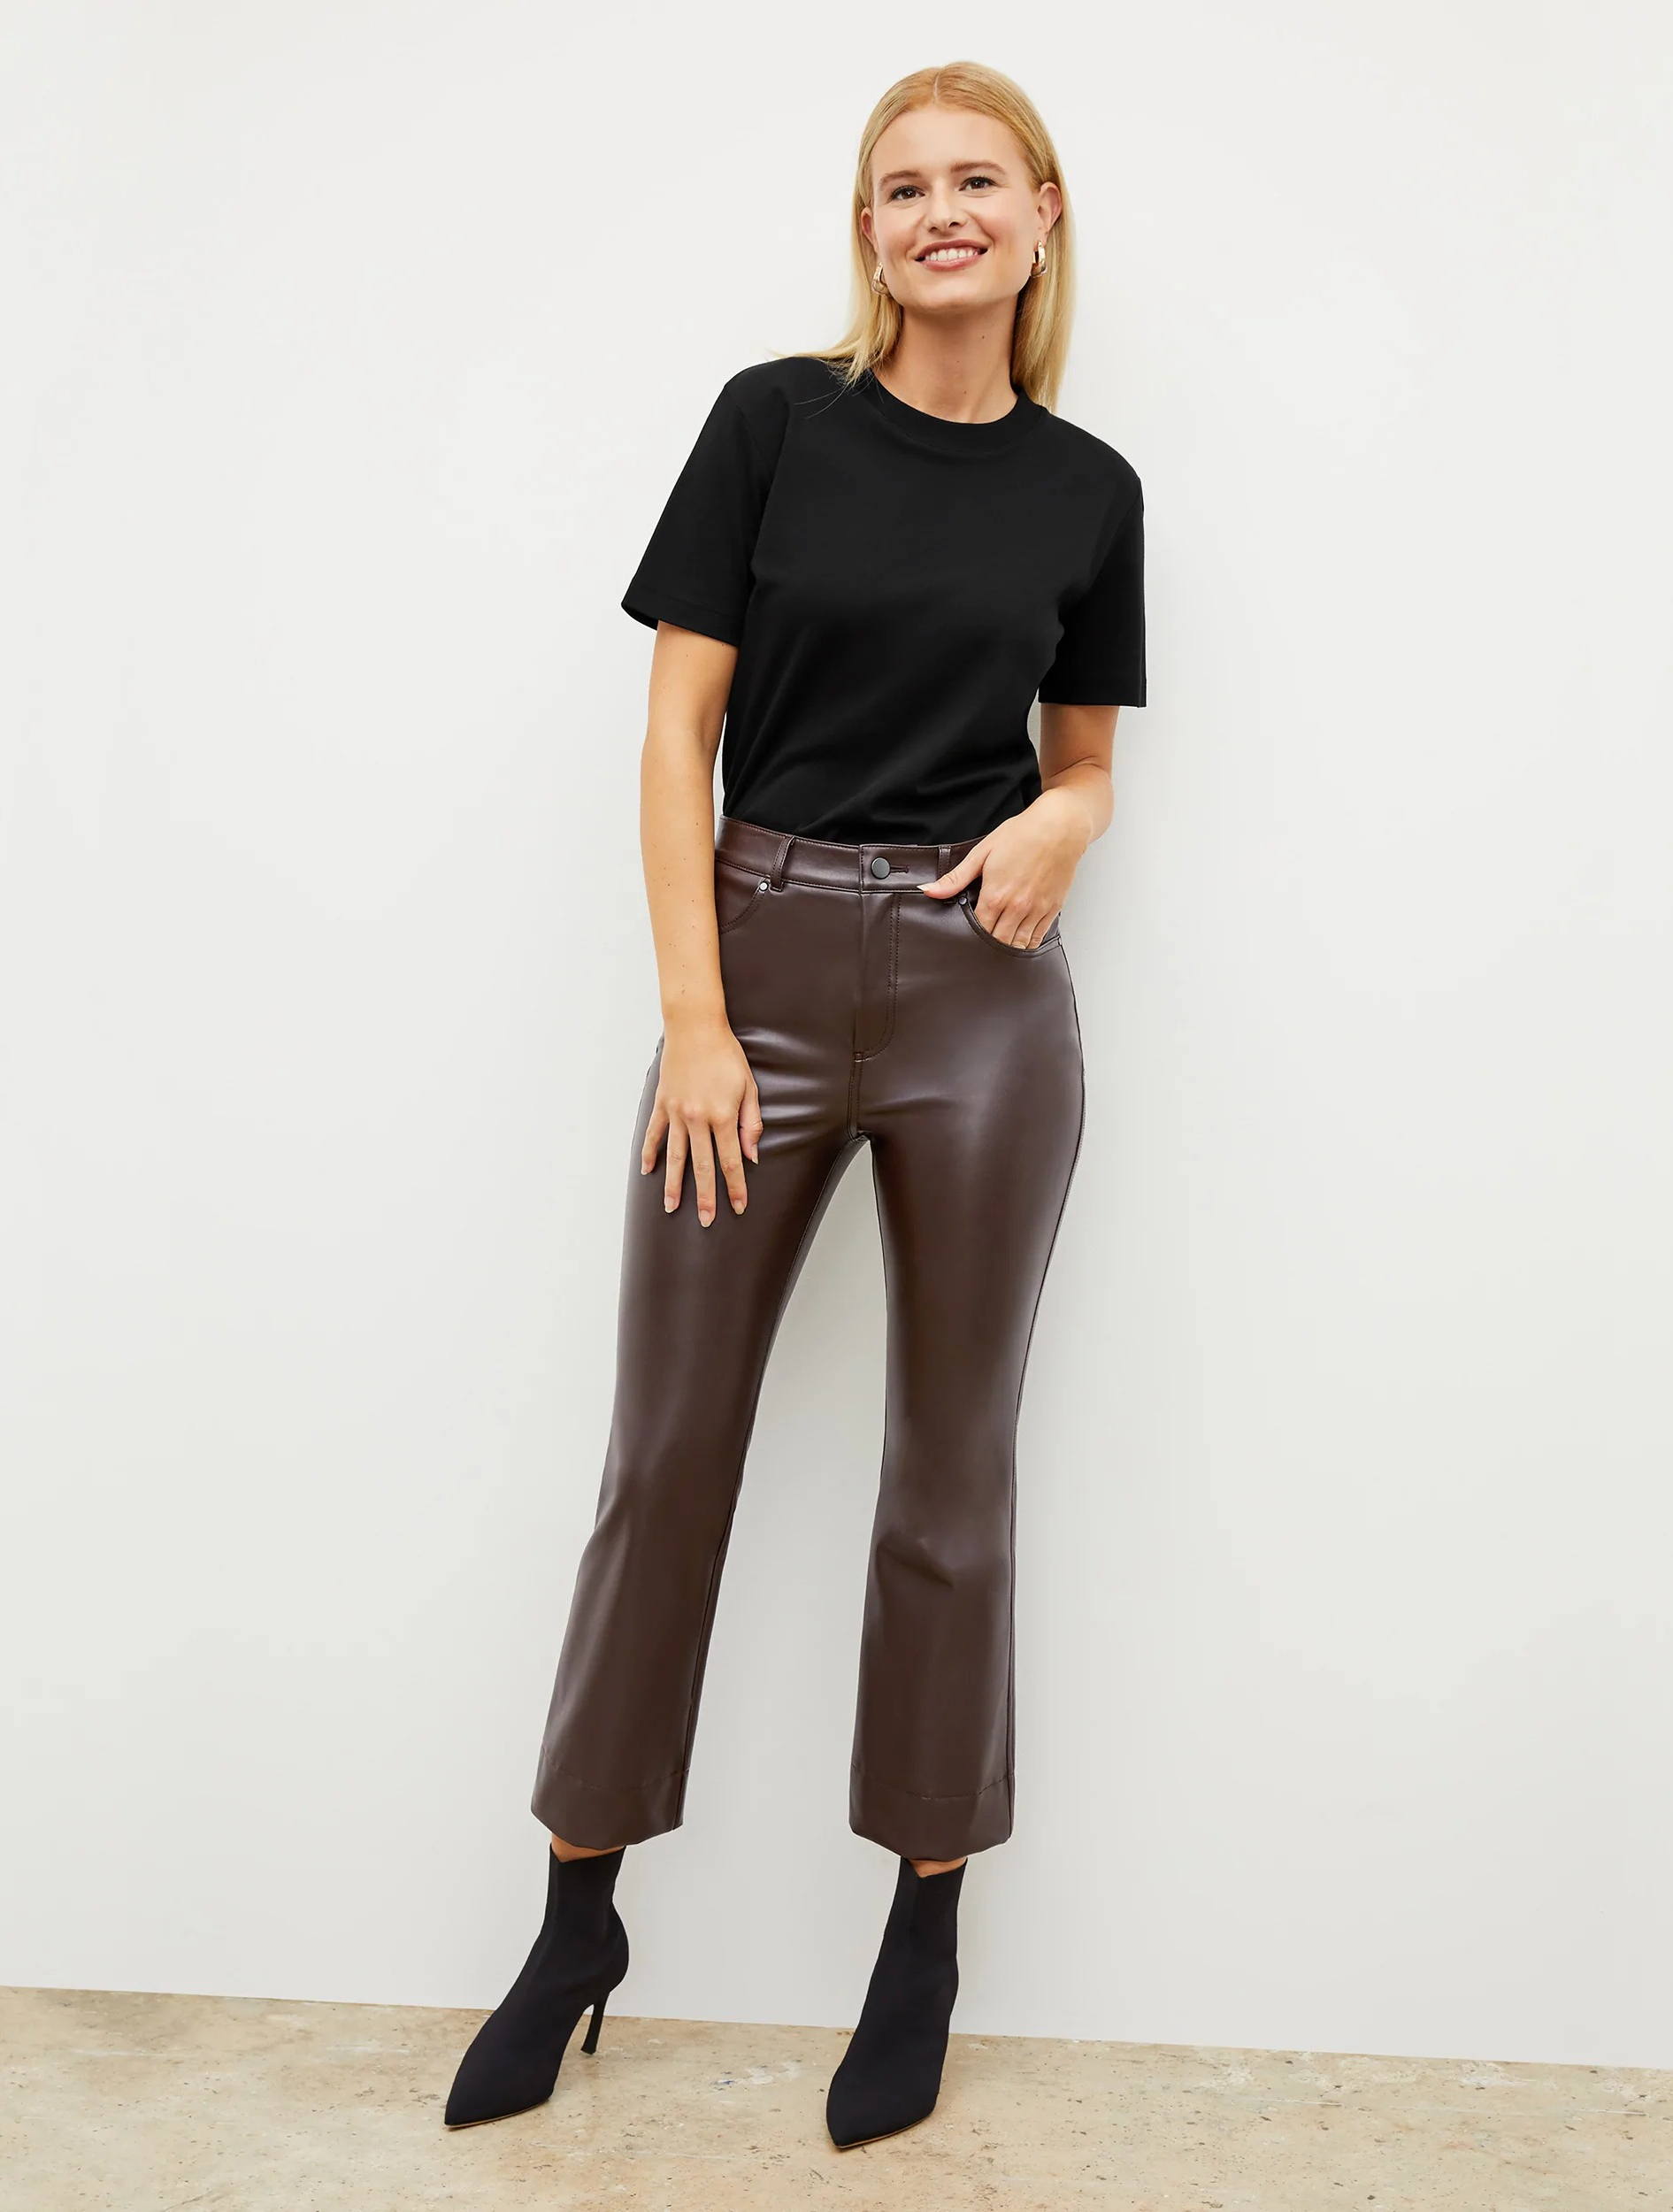 Black Leather Pants, Leather Pants Online, Buy Women's Black Leather Pants  Australia